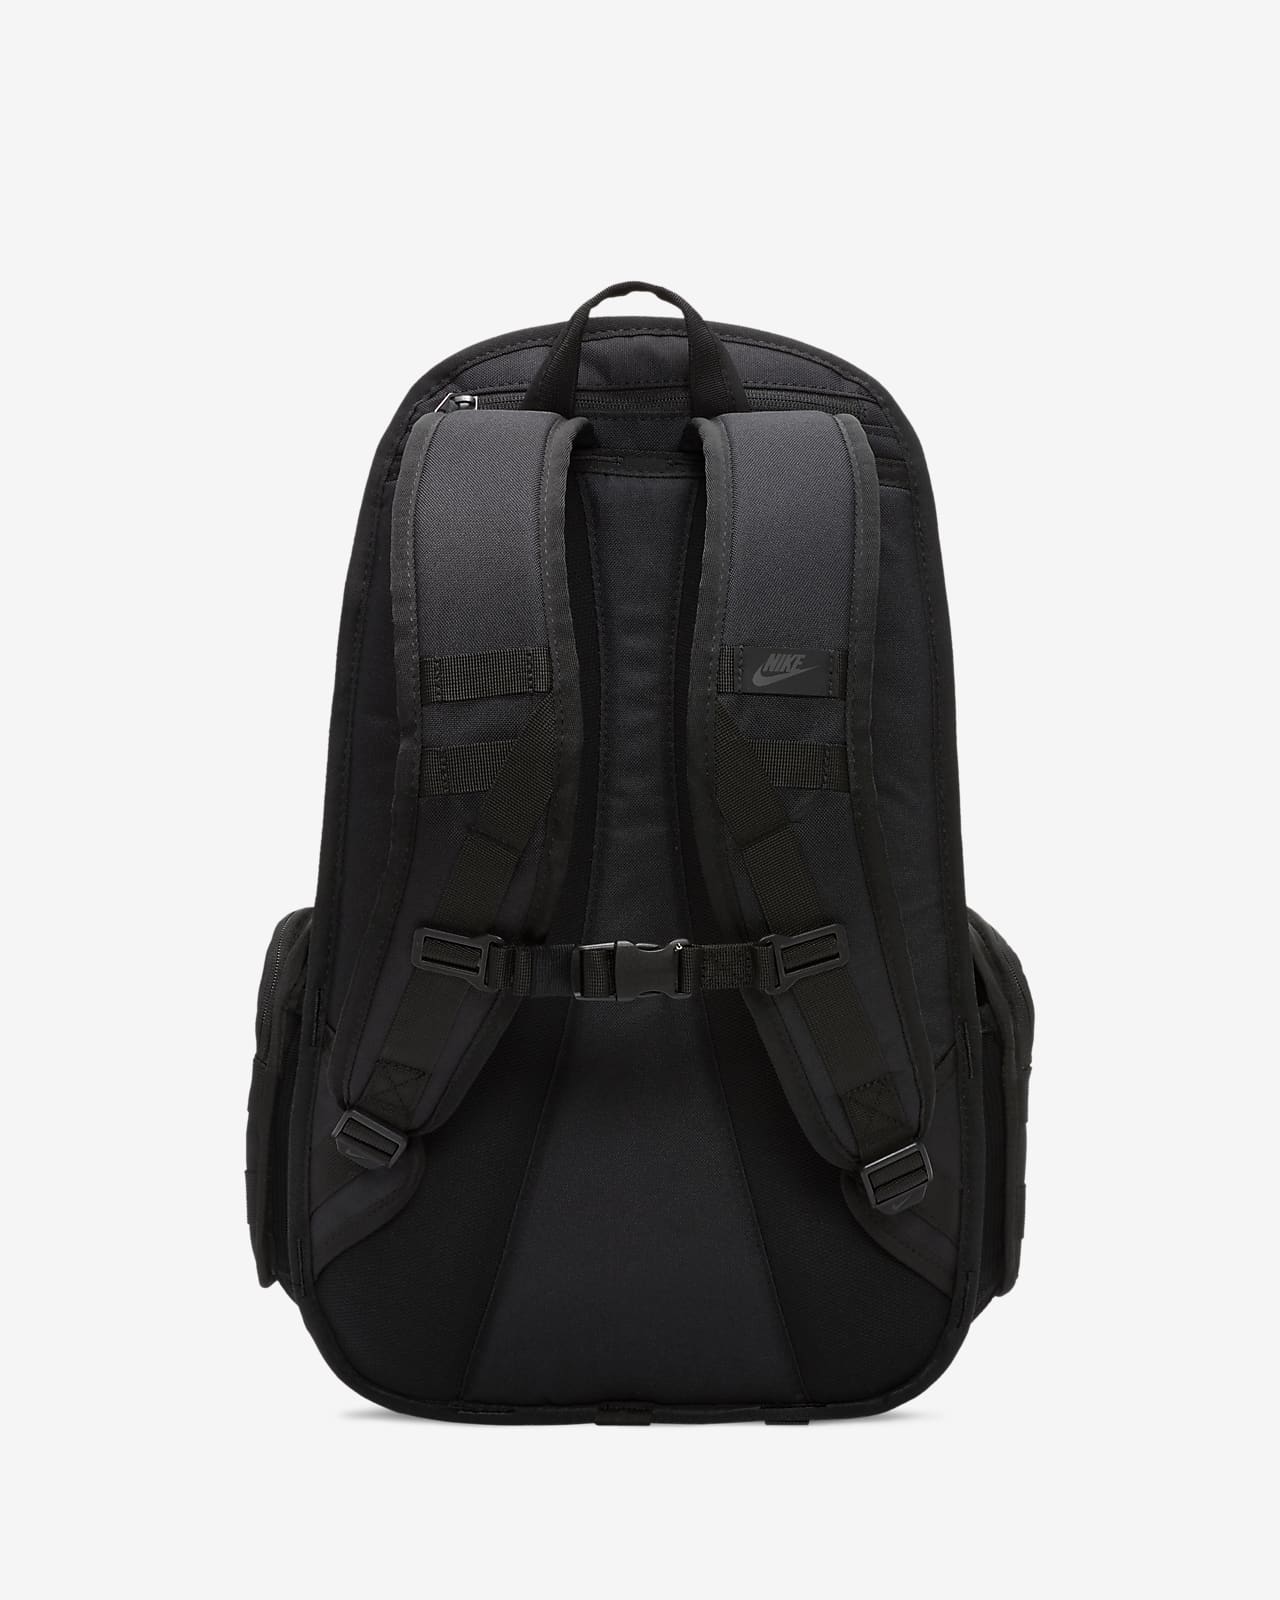 BOTT(ボット) Sport Backpack メンズ バッグ バックパック